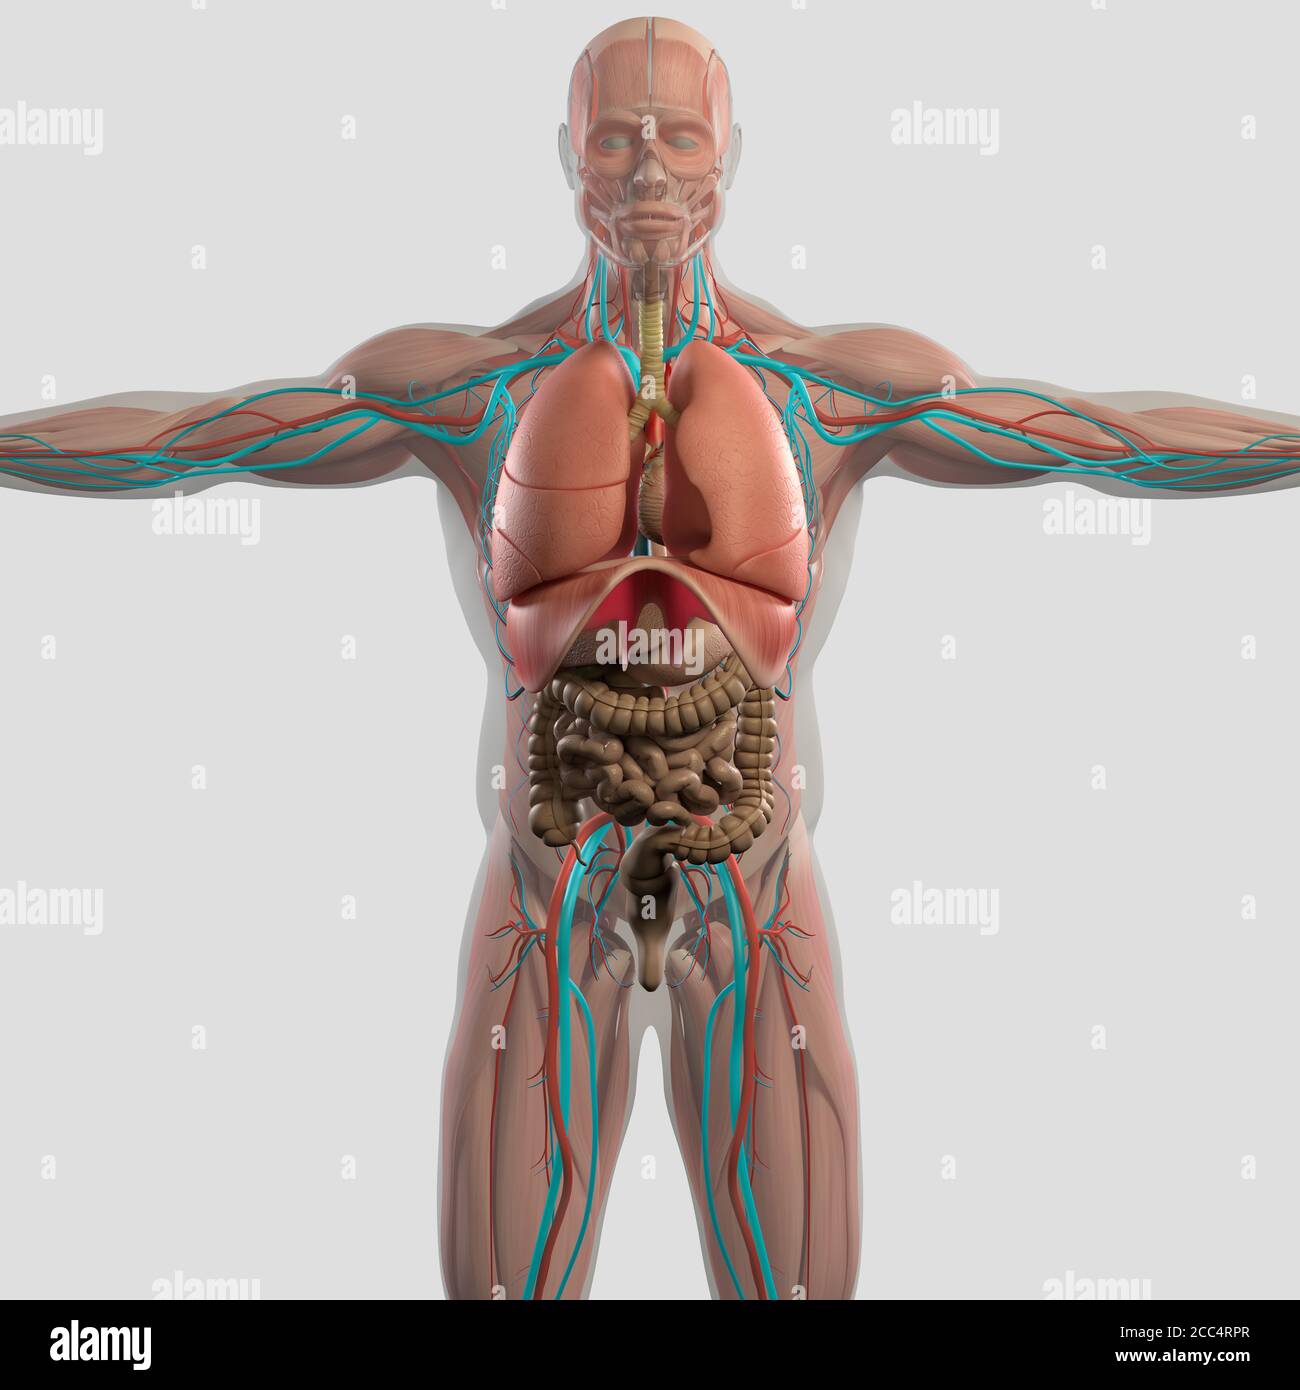 Human anatomy illustration of lungs inside body Stock Photo - Alamy